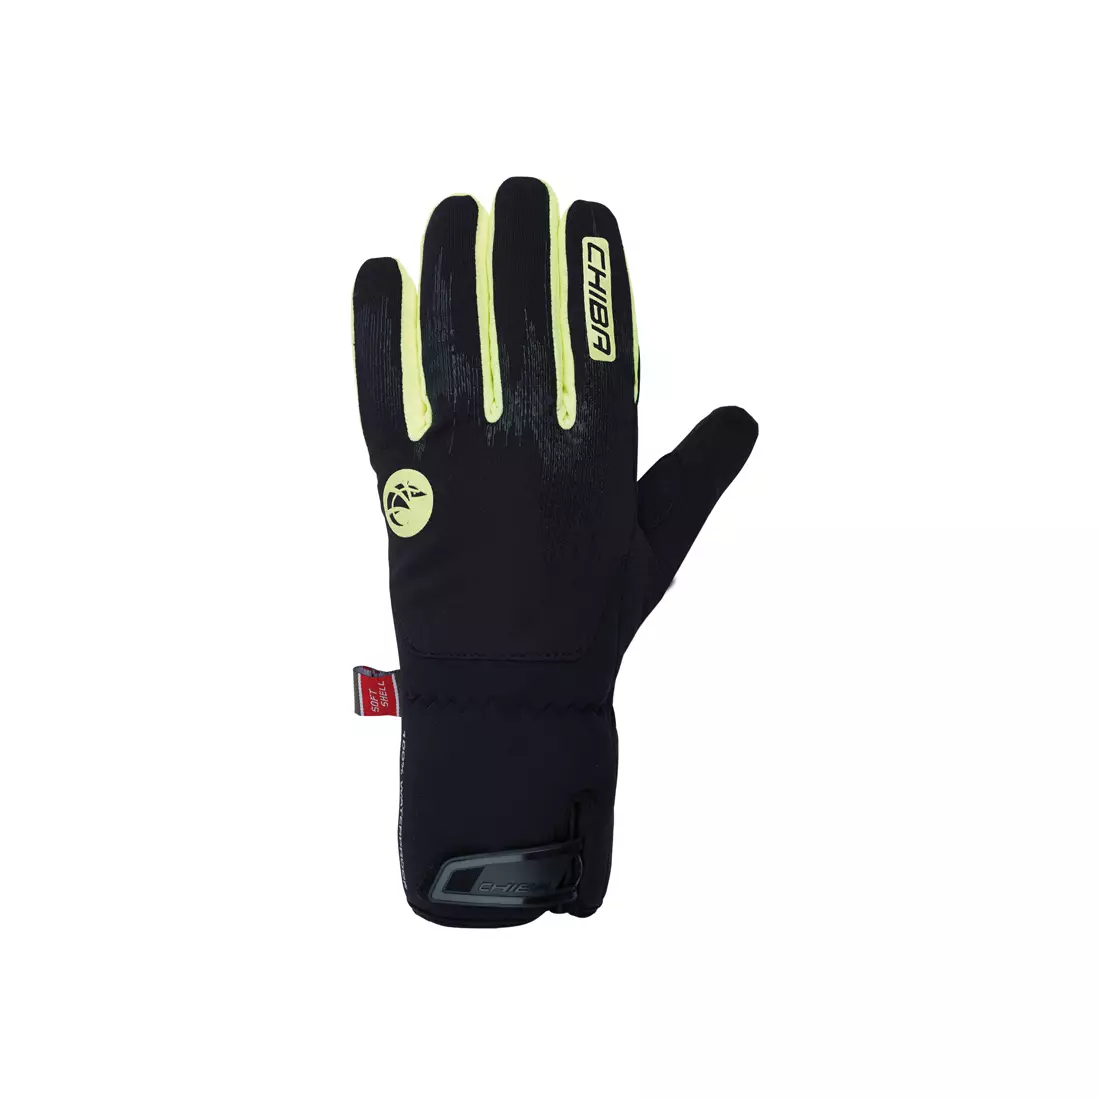 CHIBA DRY STAR SUPERLIGHT zimné cyklistické rukavice, čierno-fluor žltá 31217